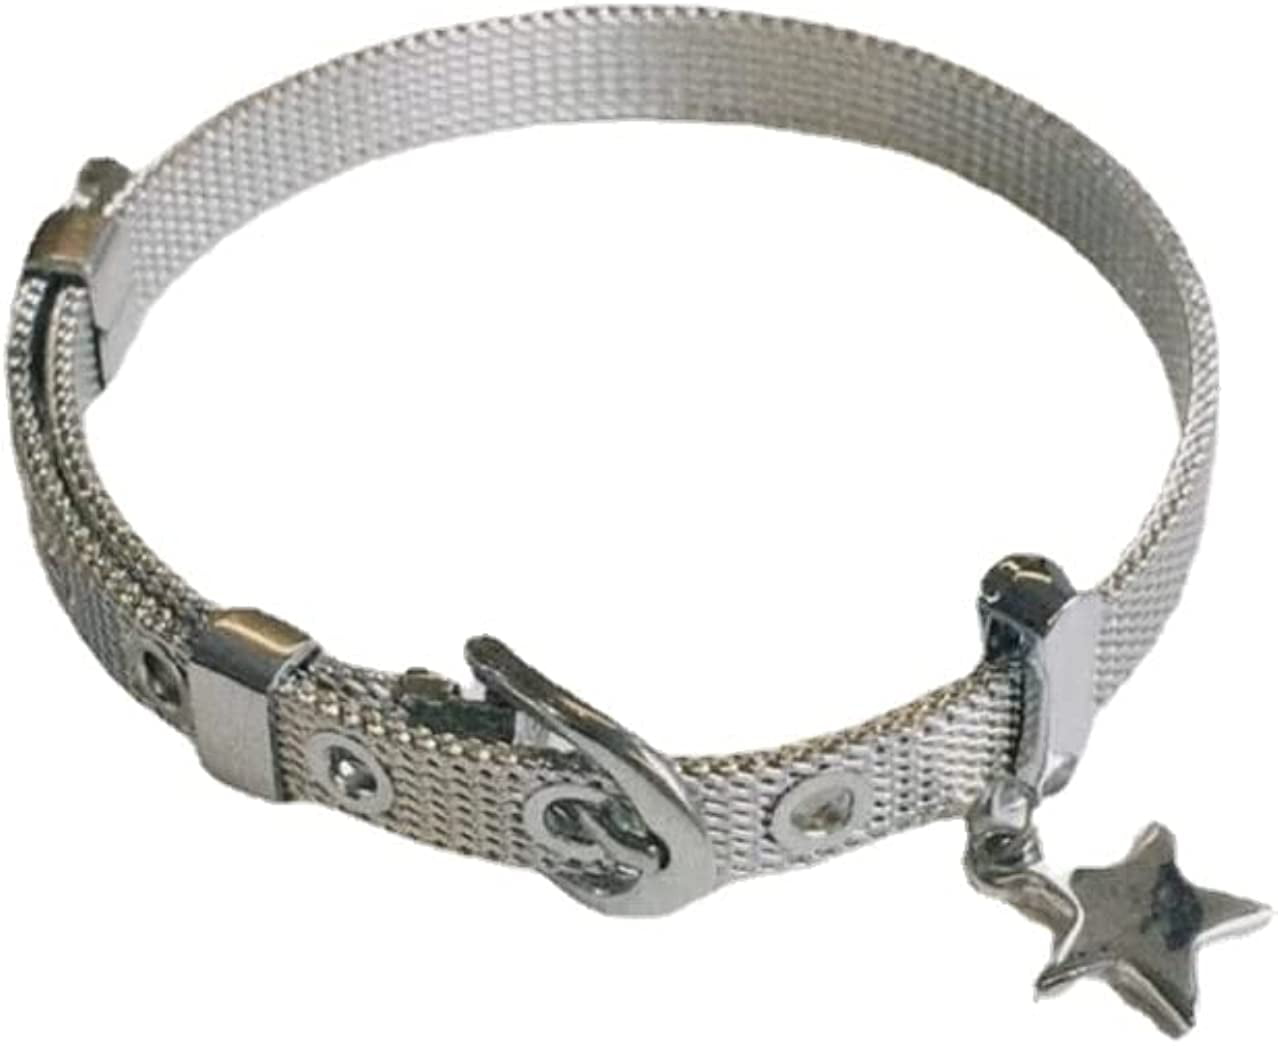 Y2K Star Pearl Beaded Chain Bracelets Vintage Adjustable Aesthetic Charm Bracelet Cool Punk Gothic Link Dainty Bracelets for Women Girls Grunge